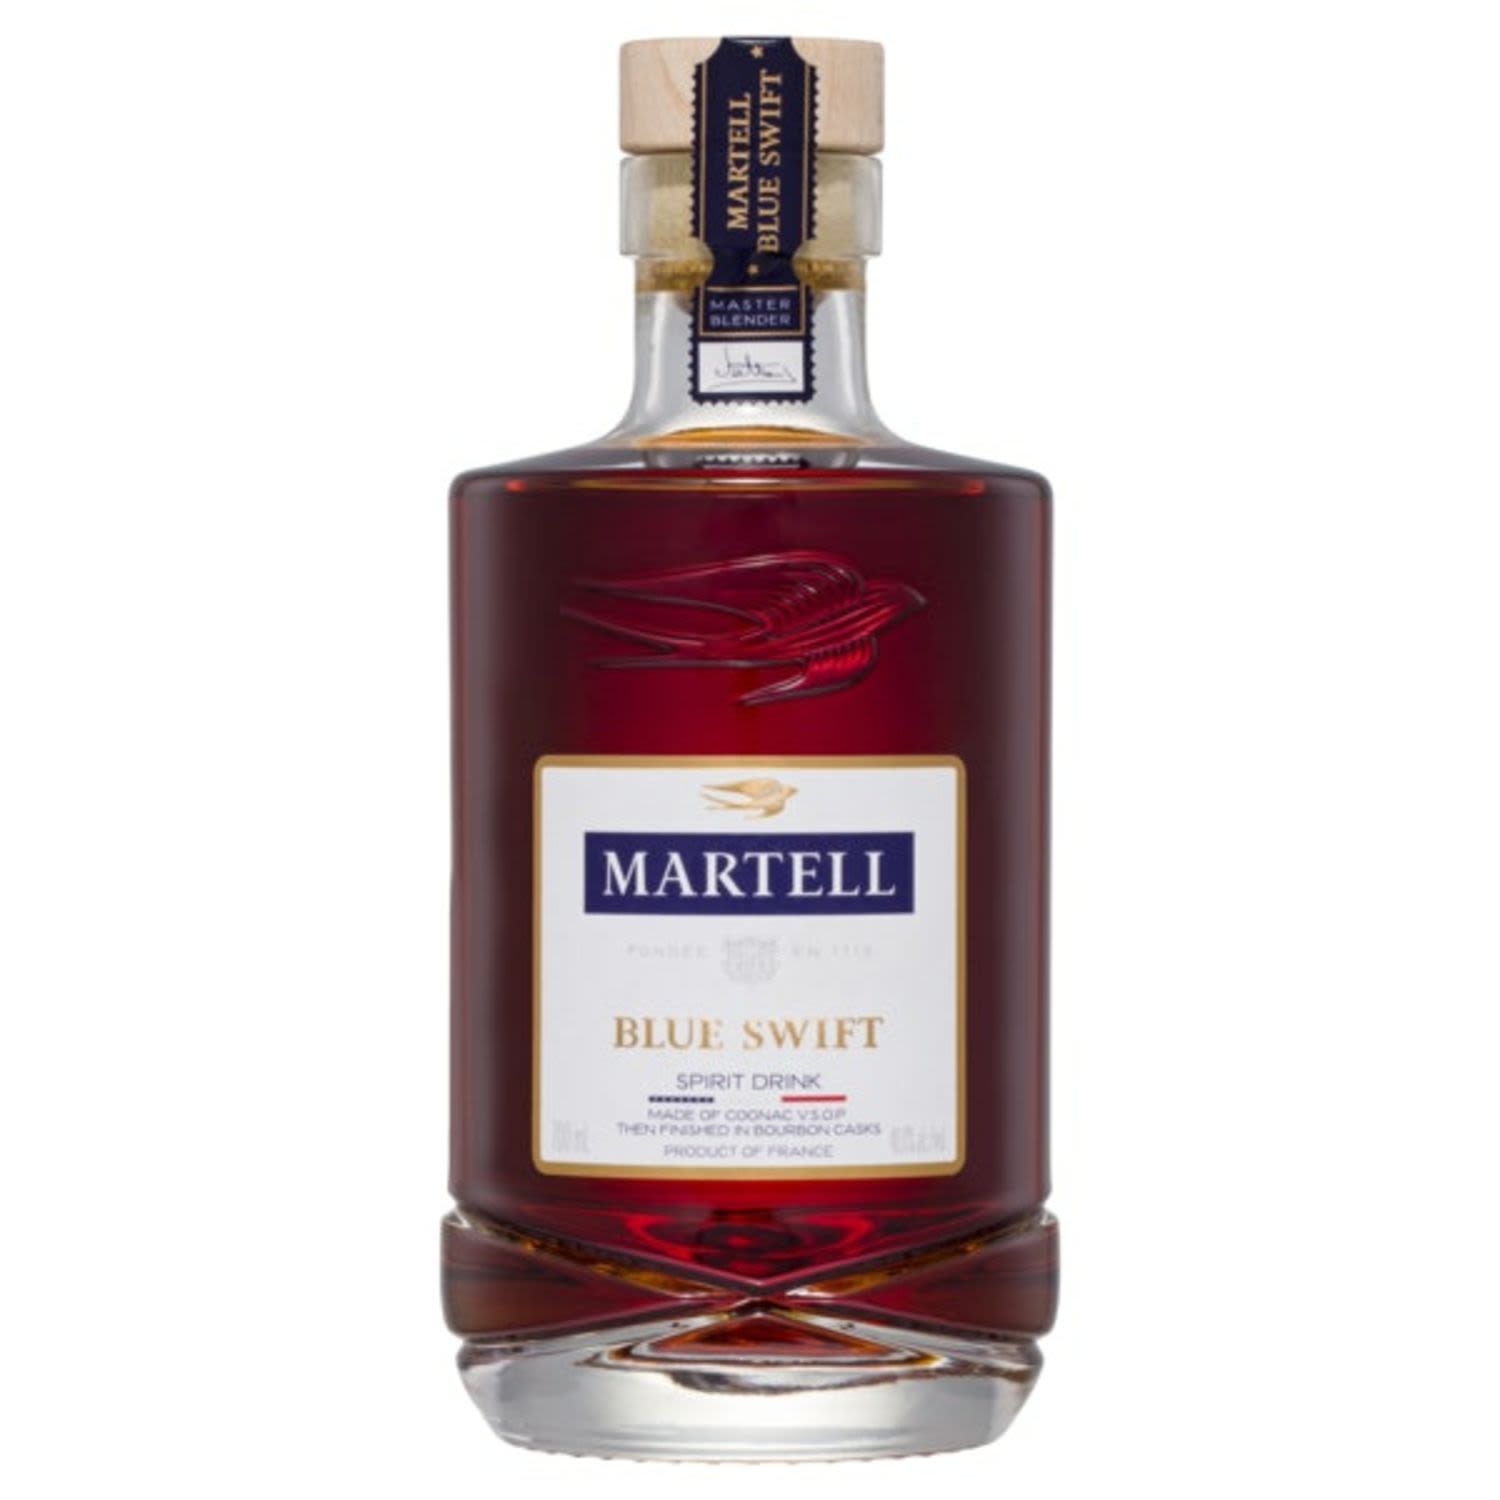 Martell Blue Swift Bourbon Cask Aged Cognac 700mL Bottle